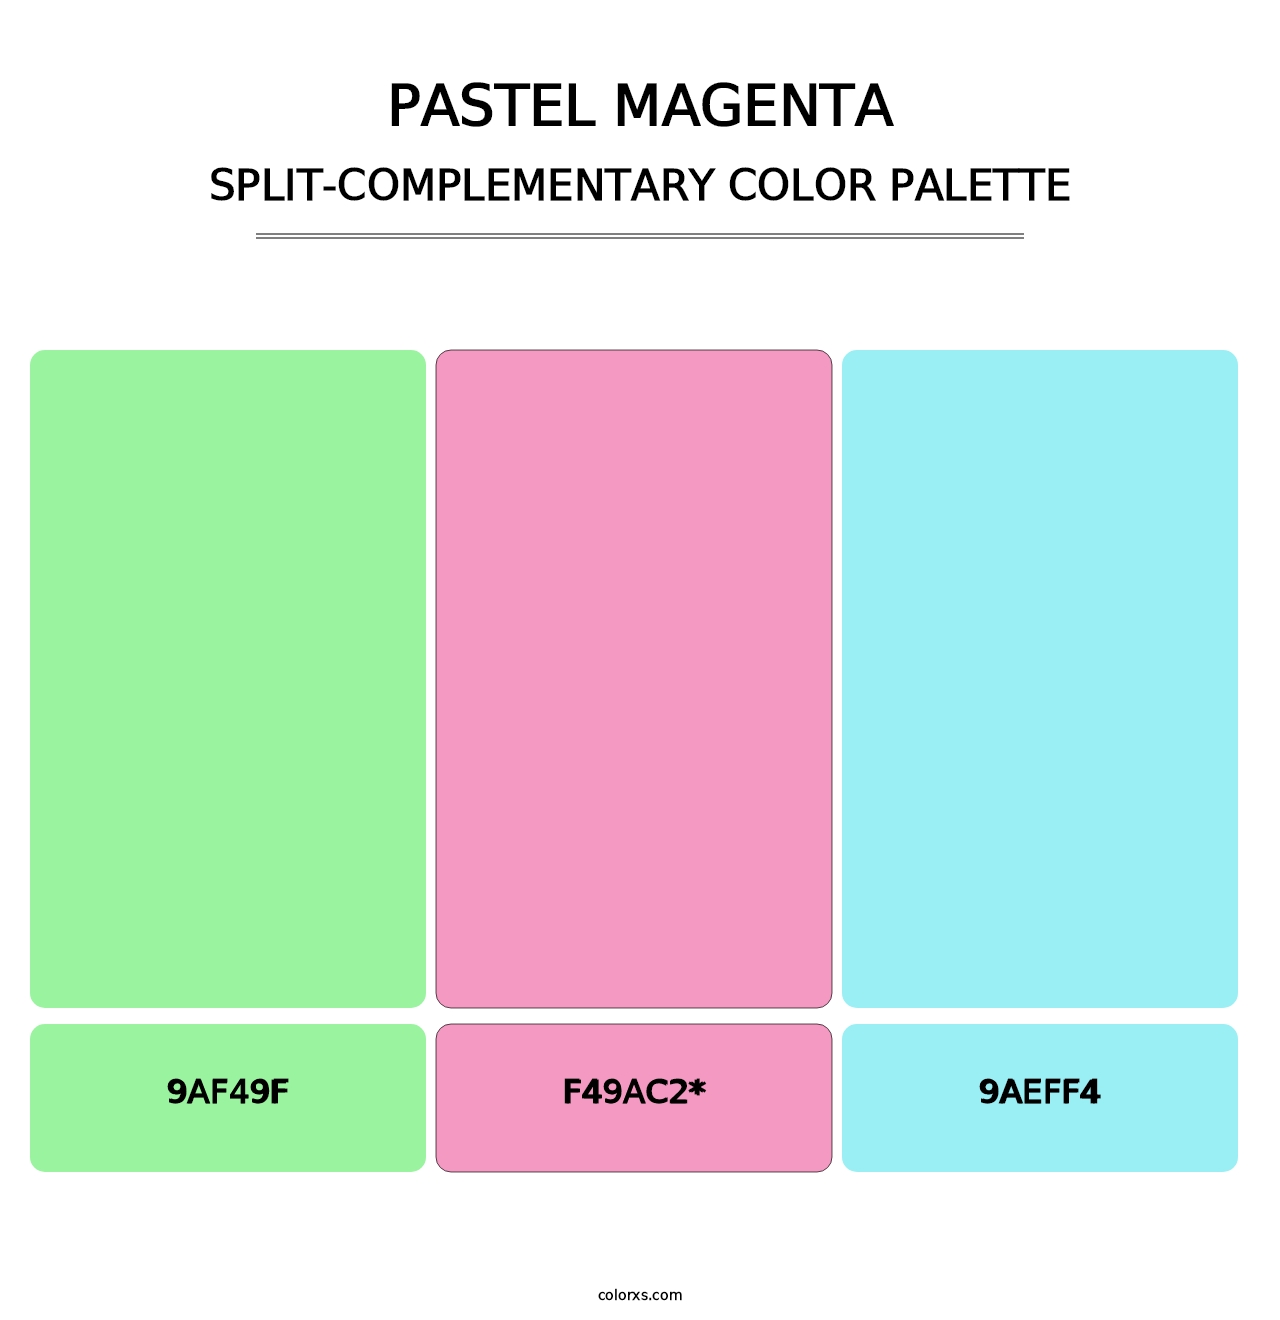 Pastel Magenta - Split-Complementary Color Palette